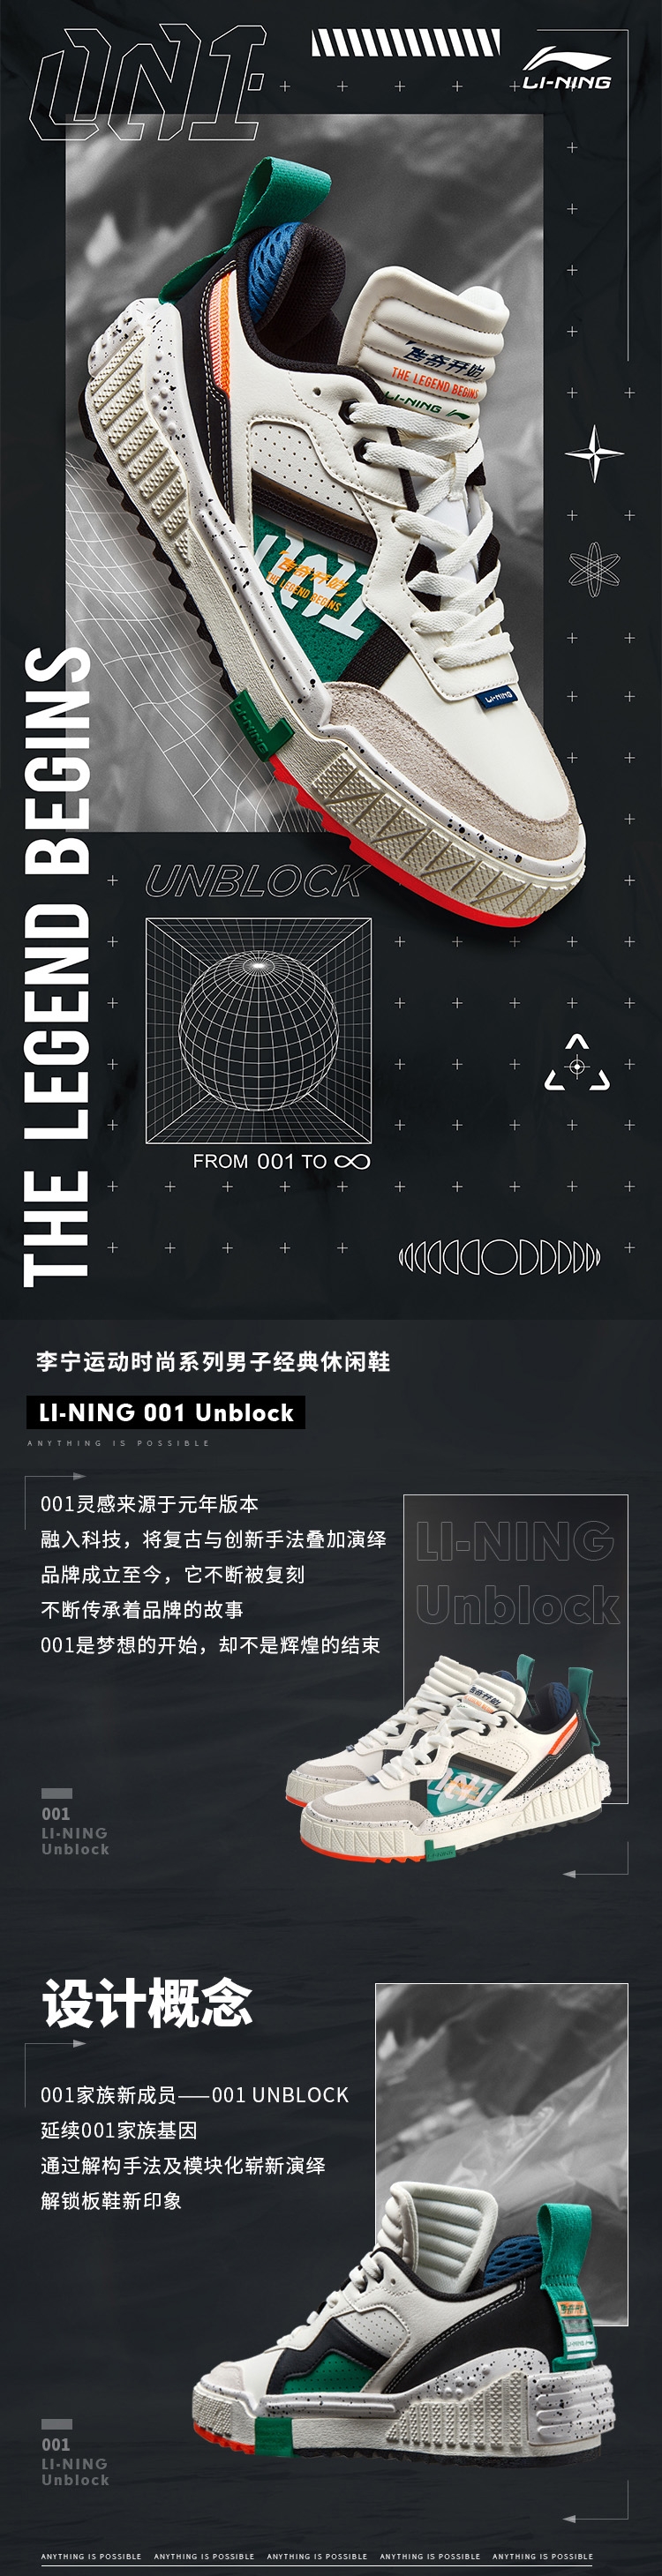 Li-Ning 001 Unblock 'The Legend Begins' Men's Classic Casual Shoes - White/Black